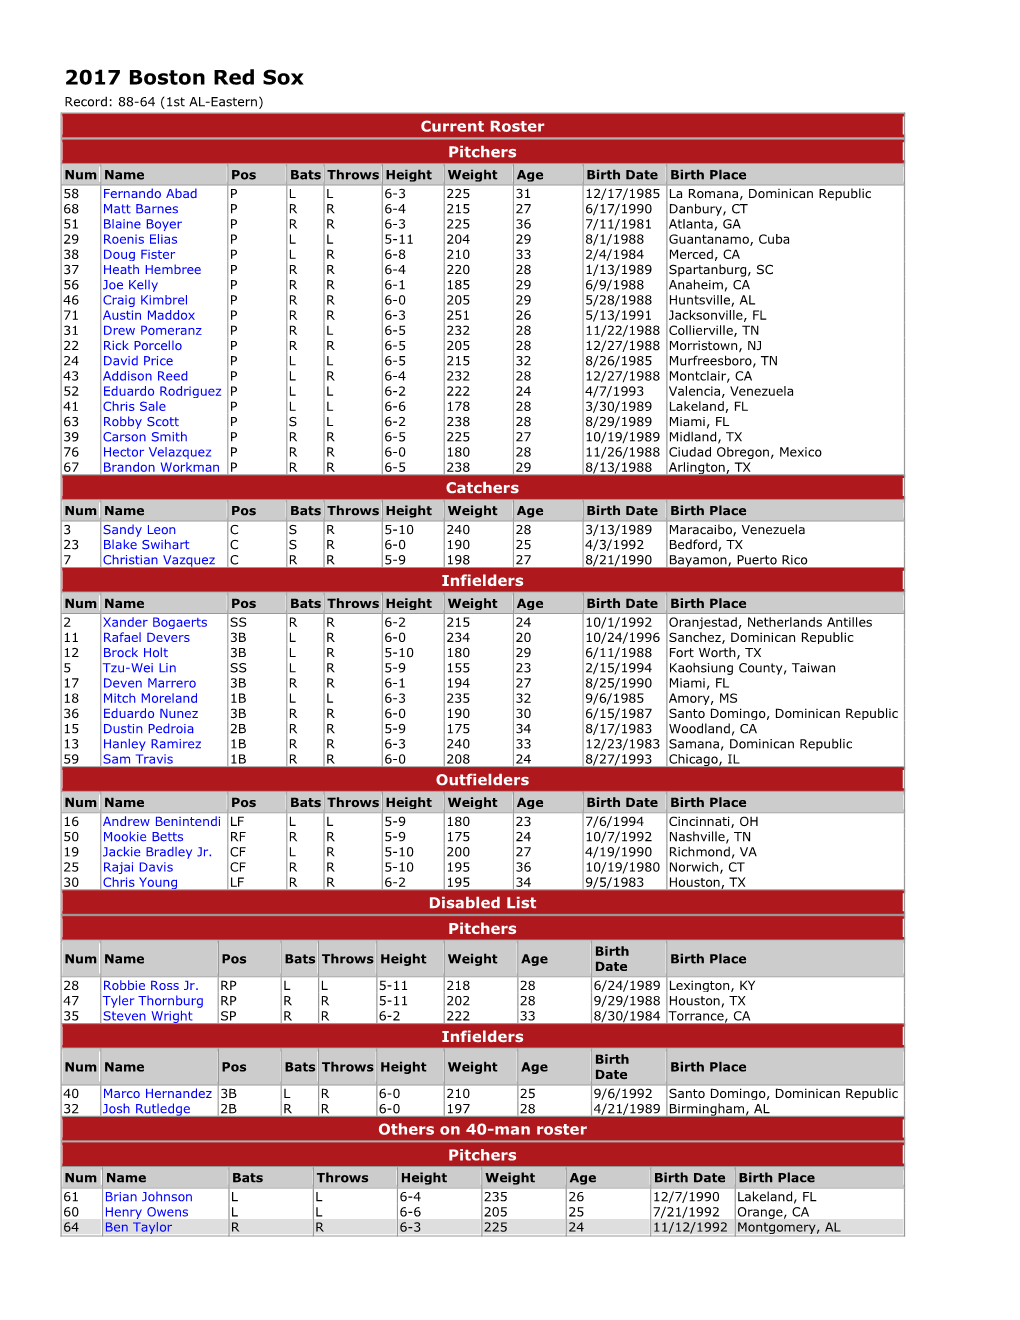 2017 Boston Red Sox Record: 88-64 (1St AL-Eastern)